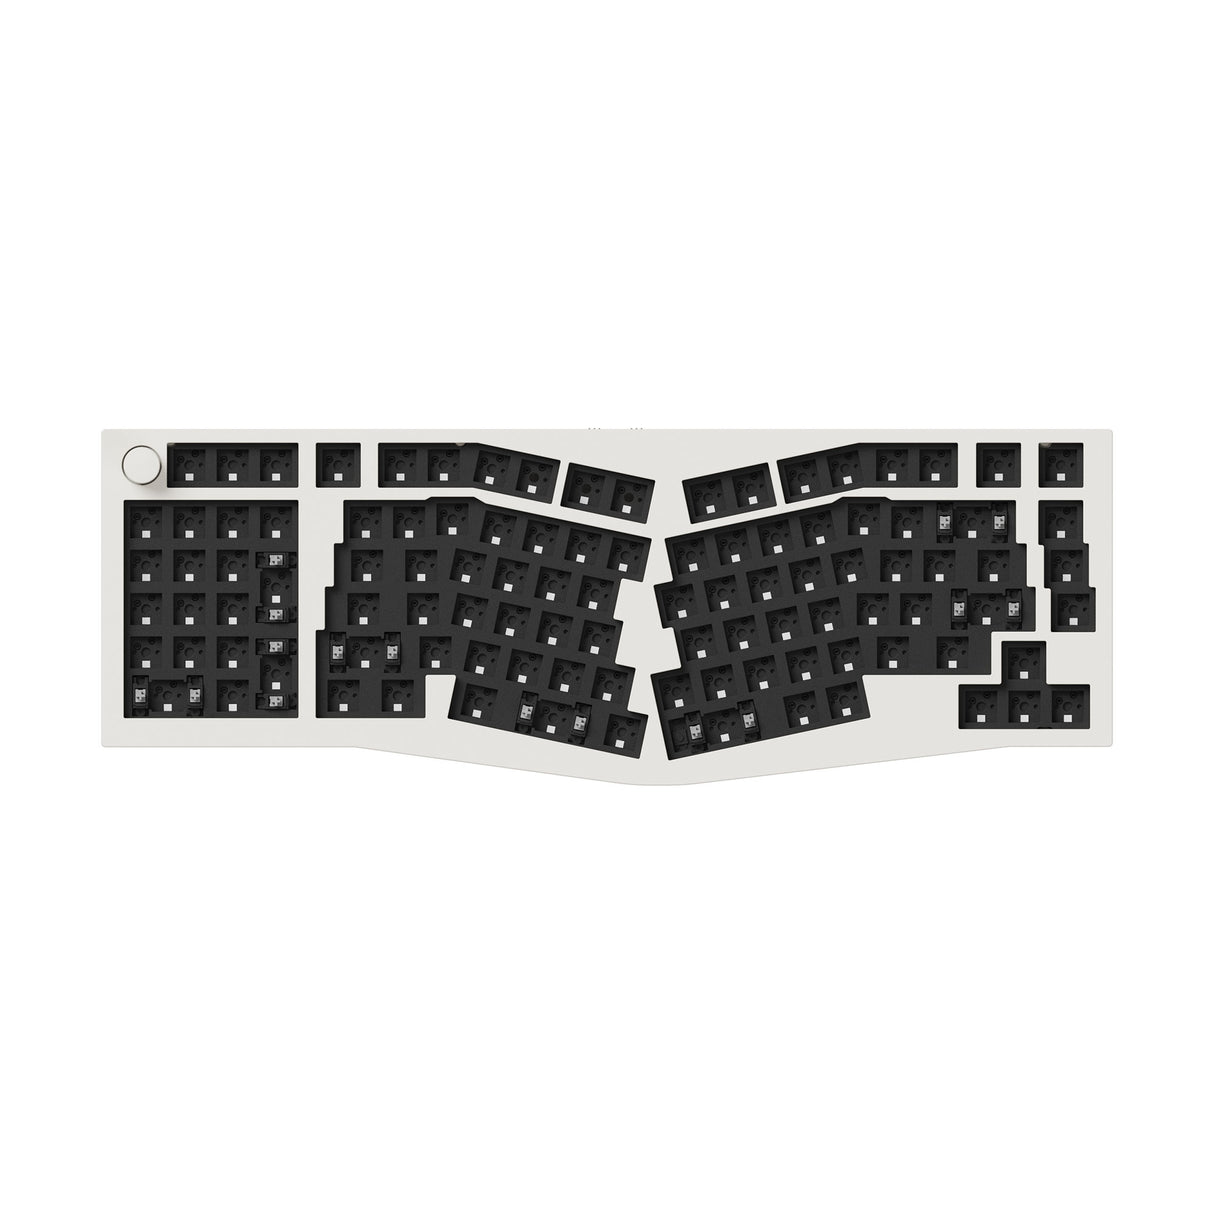 Keychron Q14 Max QMK Wireless Custom Mechanical Keyboard 96 Percent Alice Layout Aluminum White Fully Assembled Knob for Mac Windows Linux Barebone